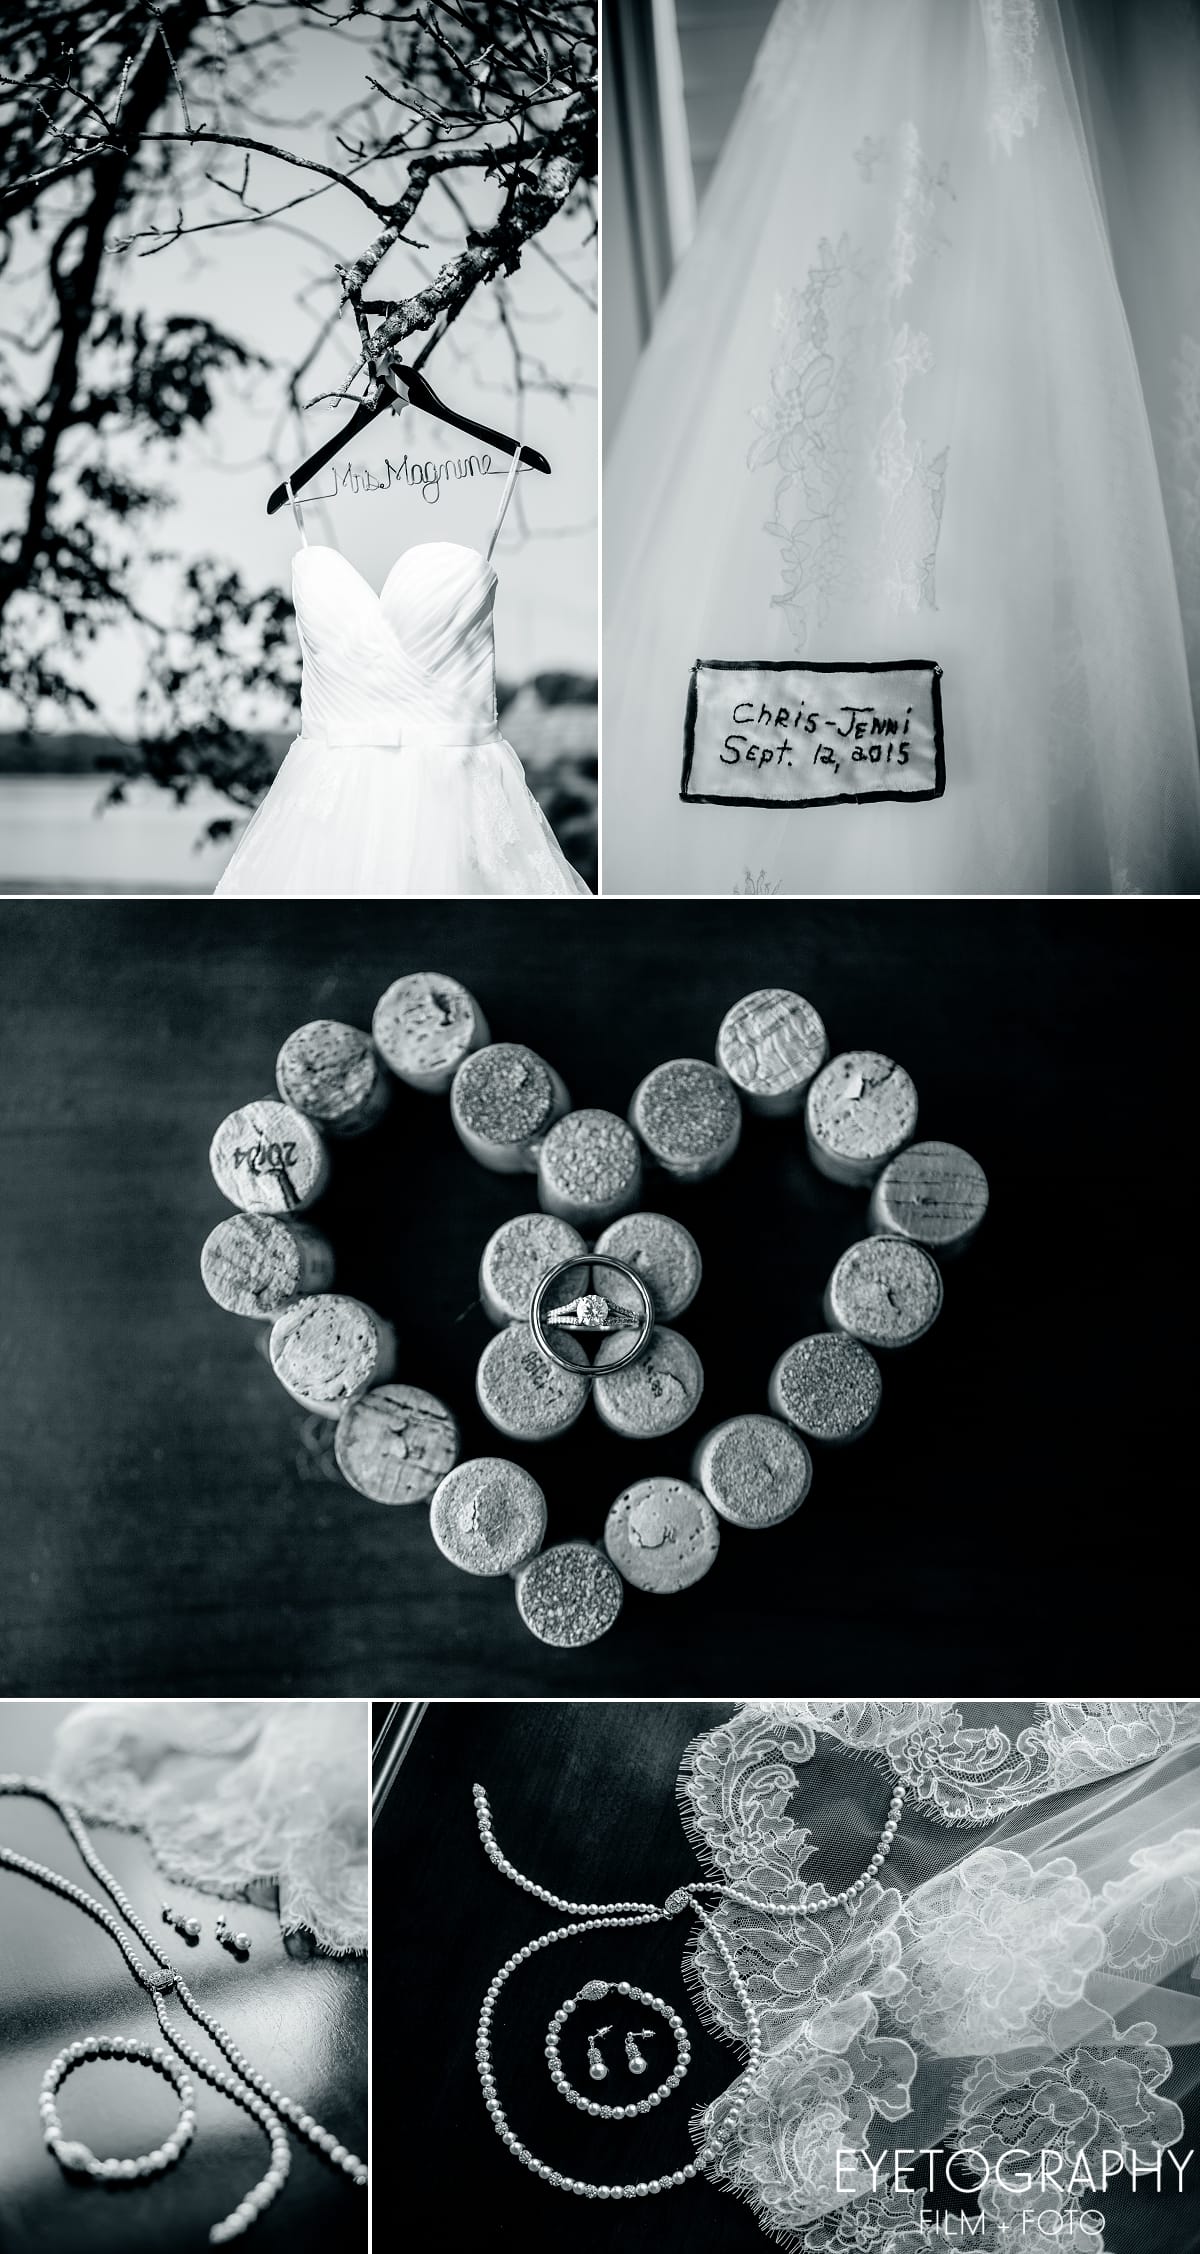 Birchwood Wisconsin Wedding Photography - Chris + Jenni - Eyetography Film + Foto